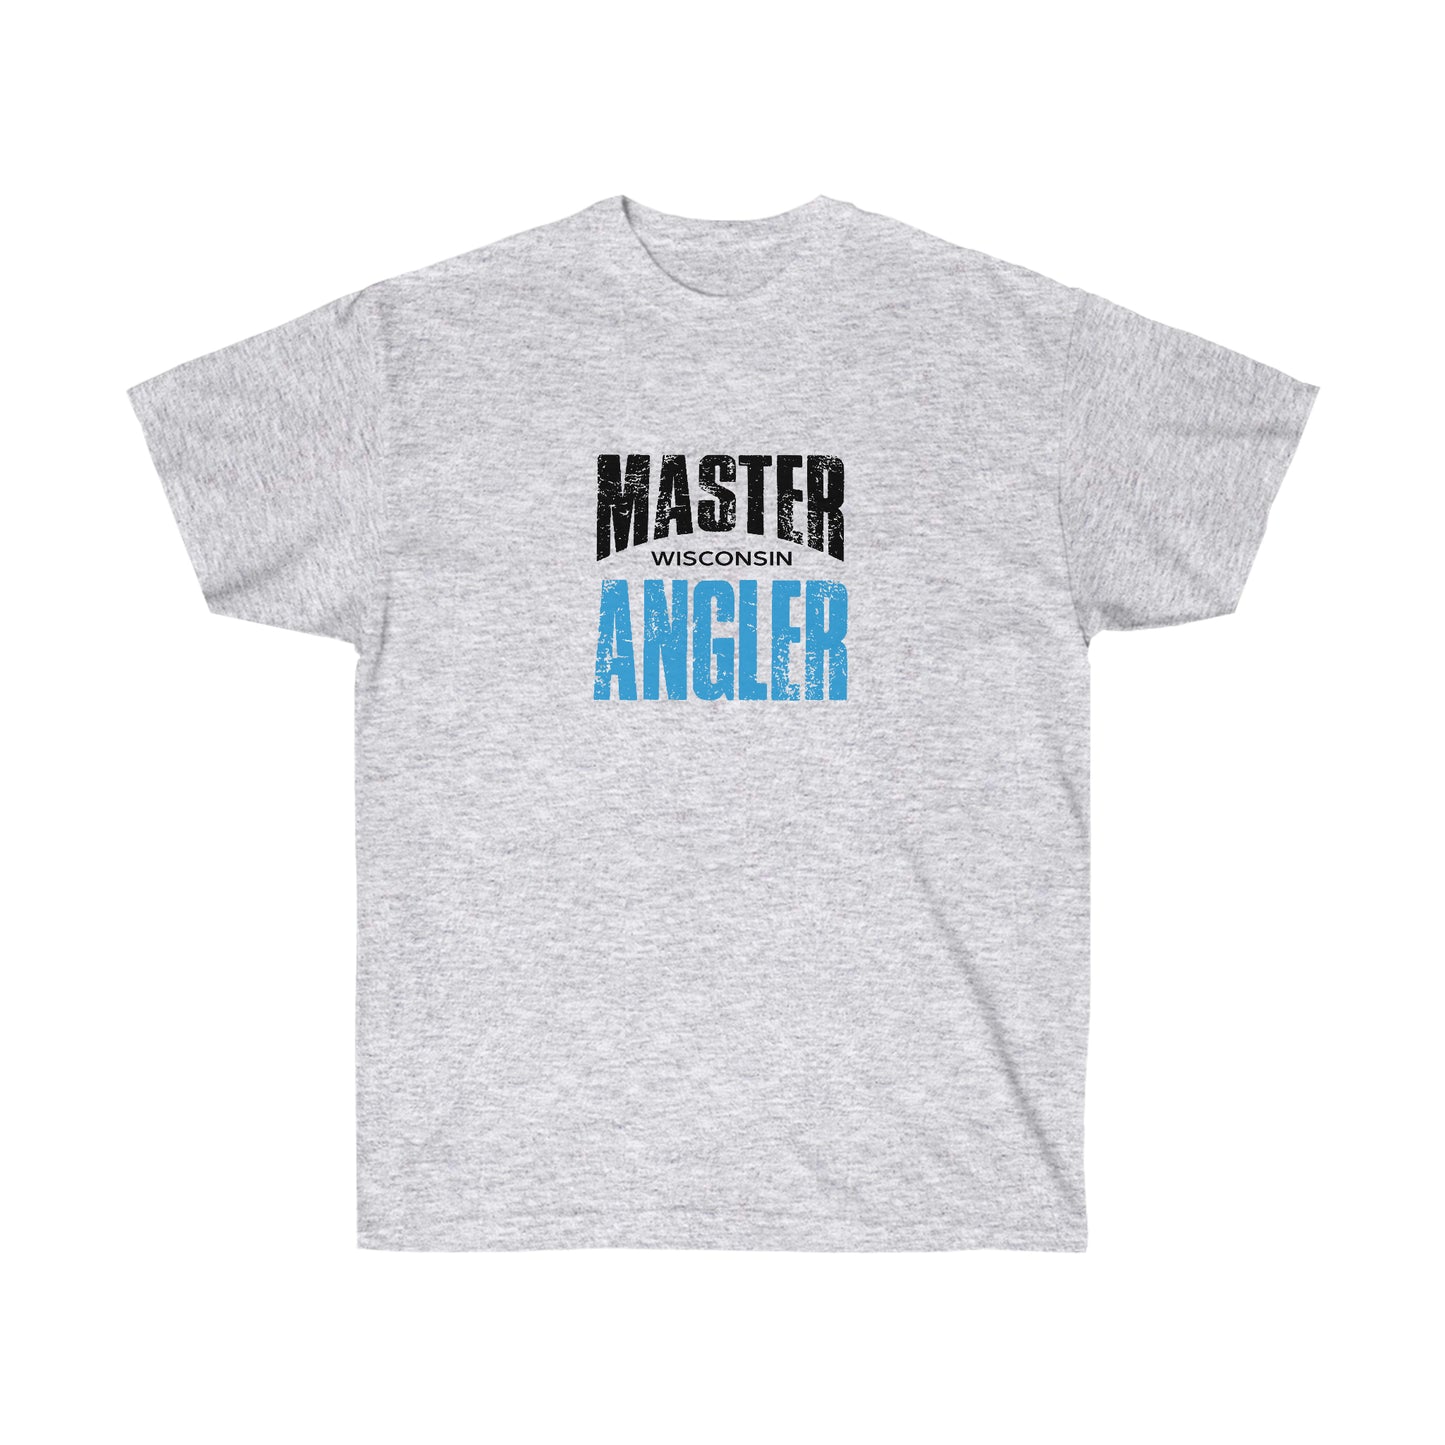 Wisconsin Master Angler Tee Blue Logo